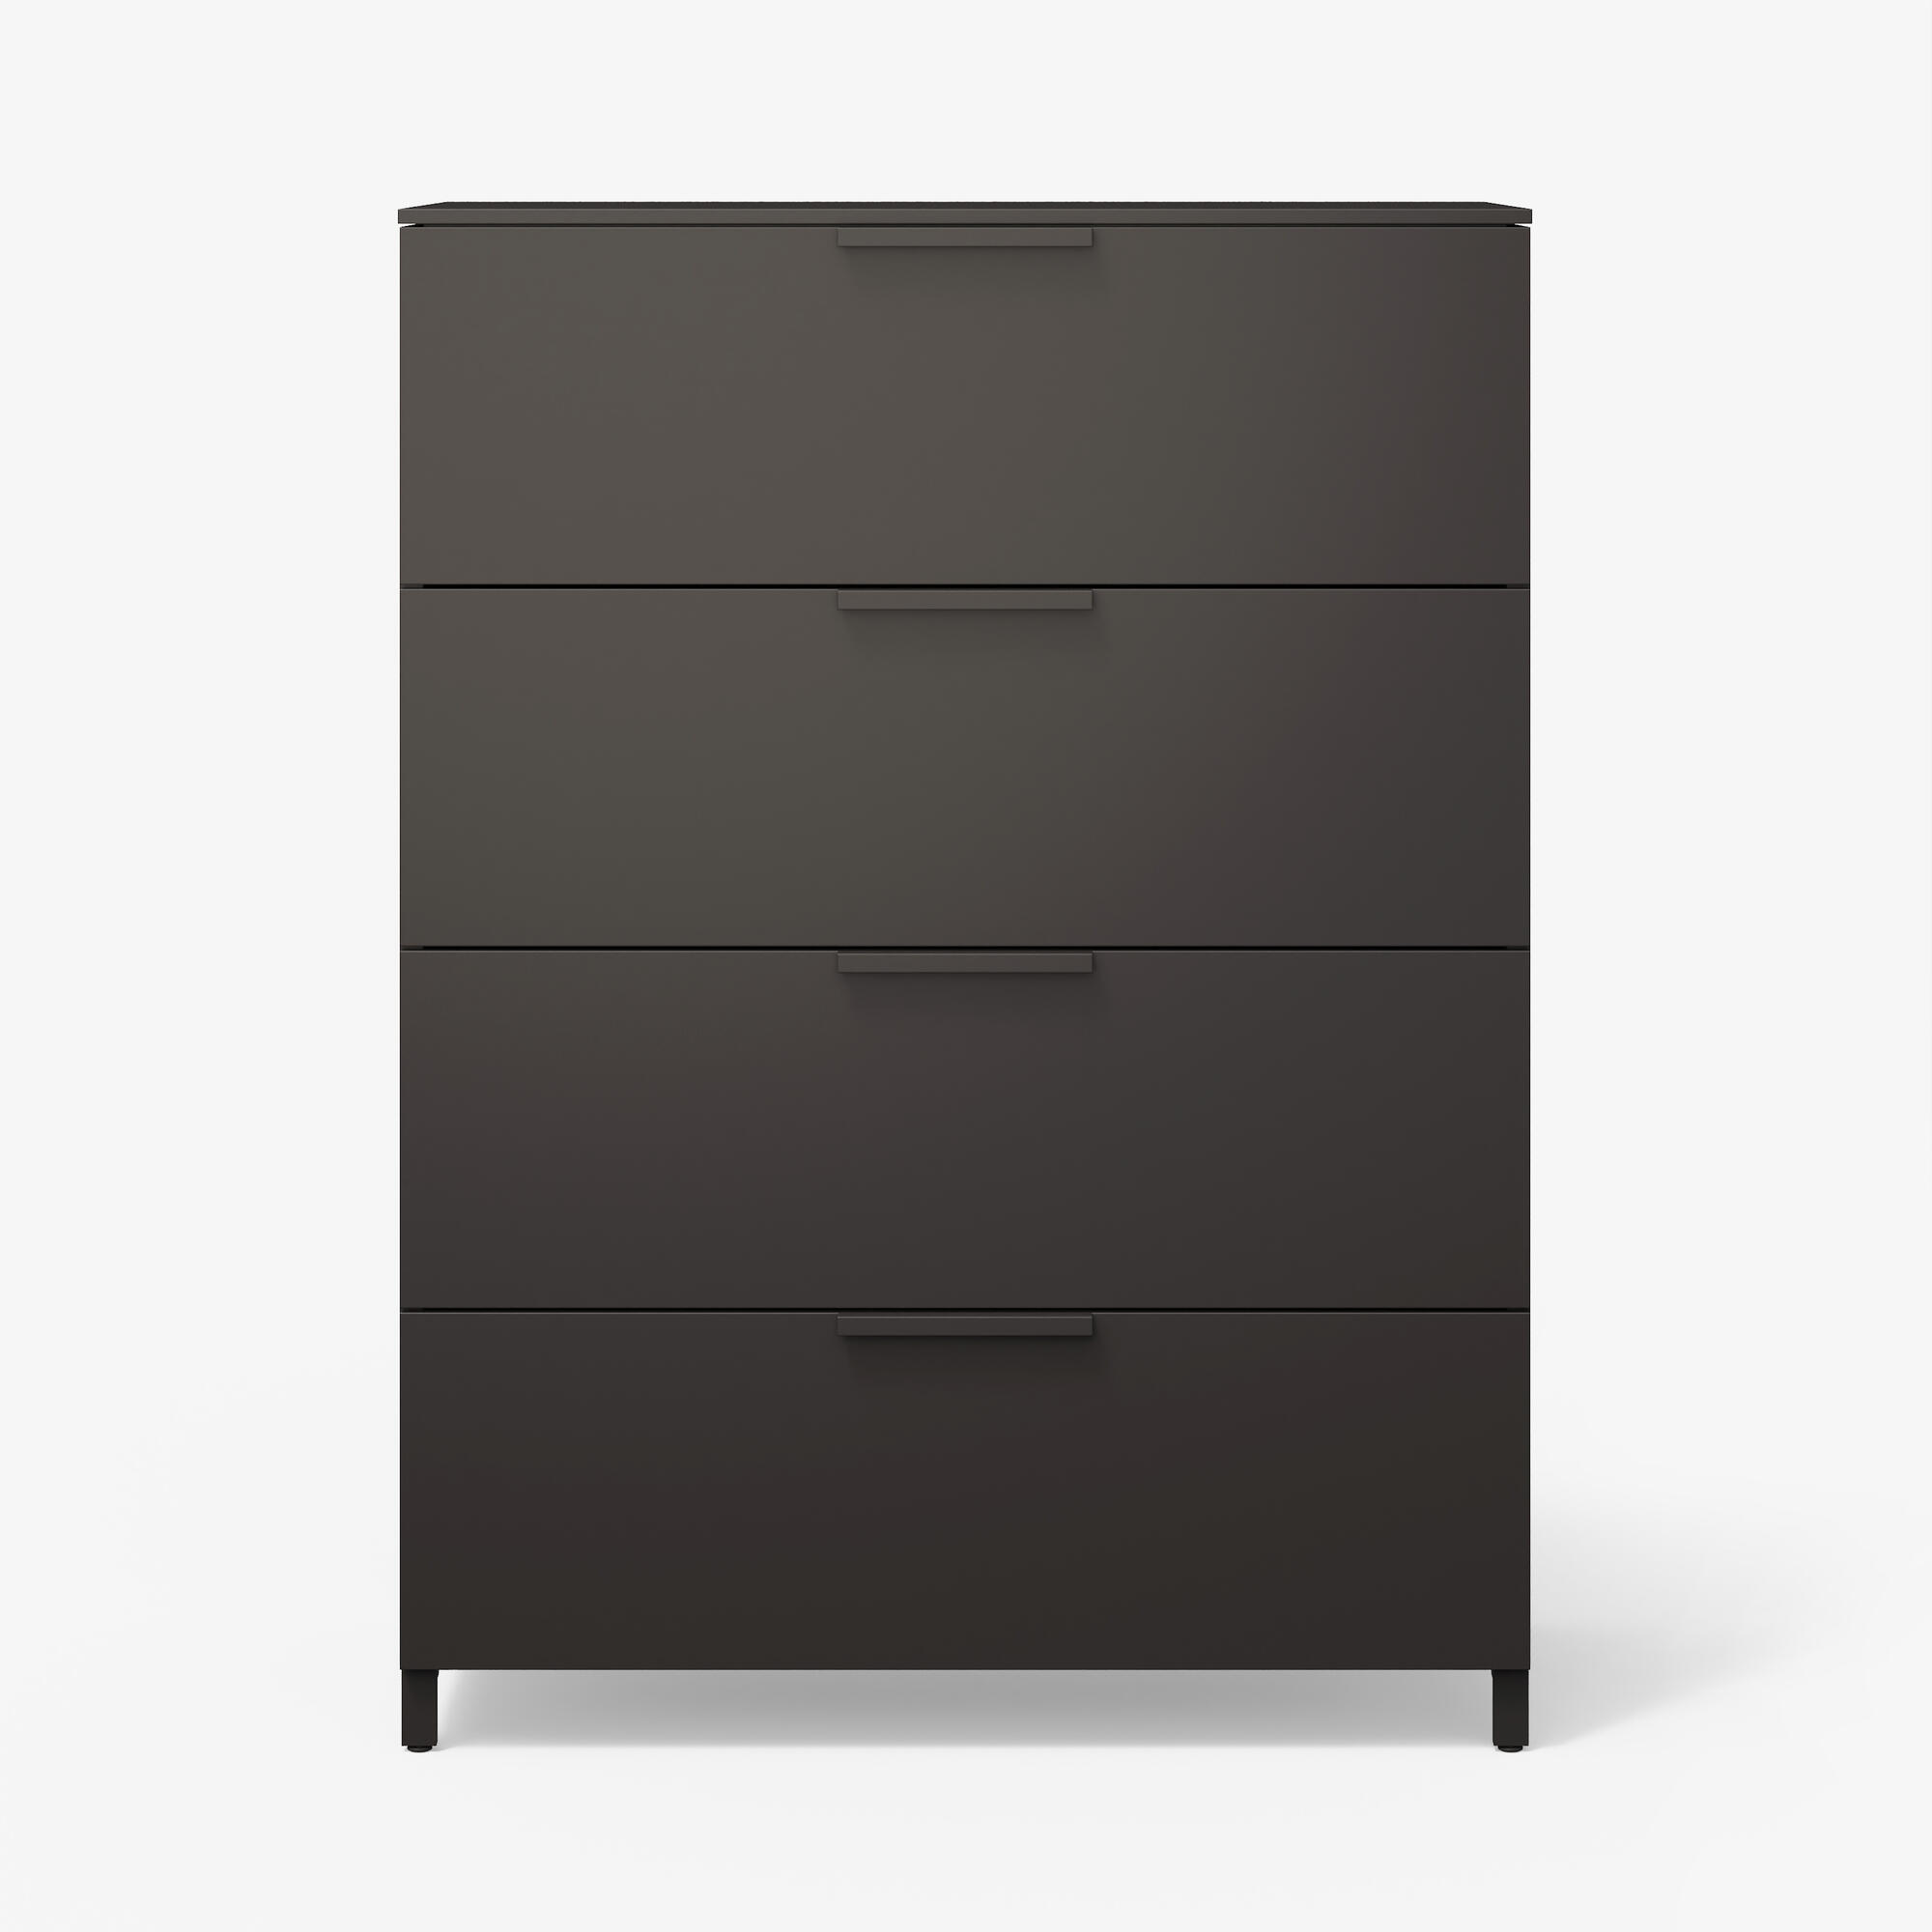 Image Sideboard unit 4 drawers c 13 2